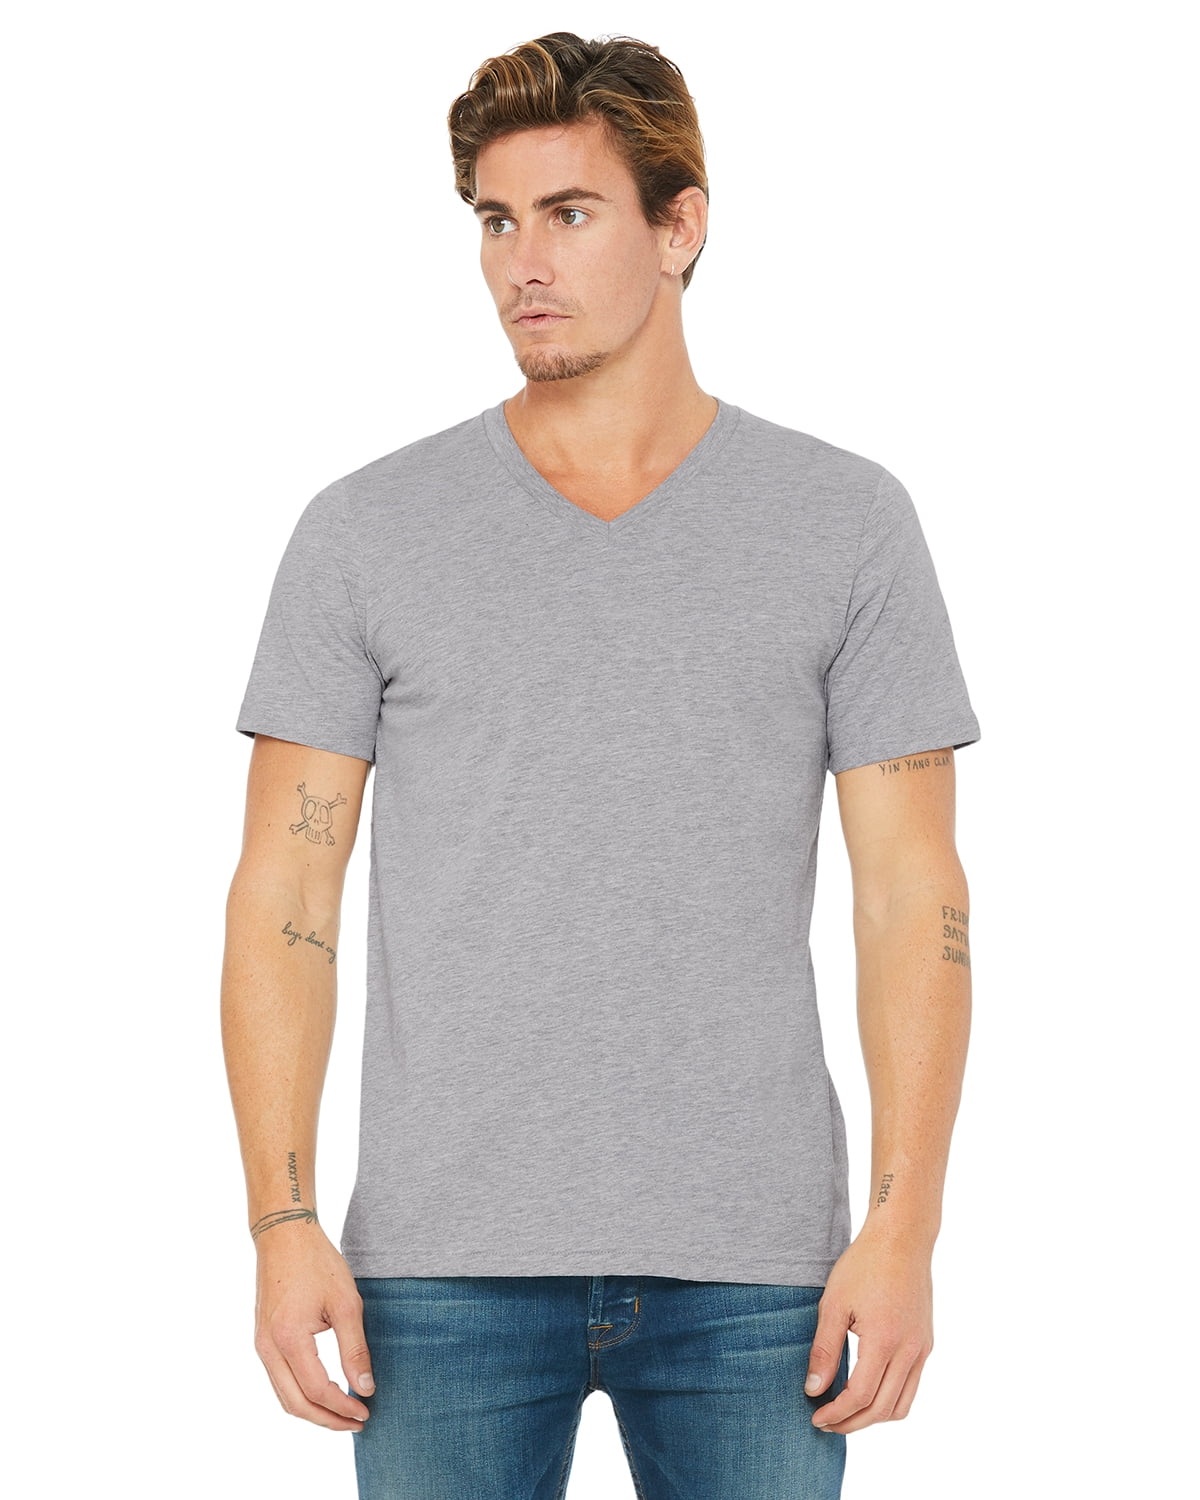 BELLA+CANVAS - The Unisex Jersey Short-Sleeve V-Neck T-Shirt - ATHLETIC ...